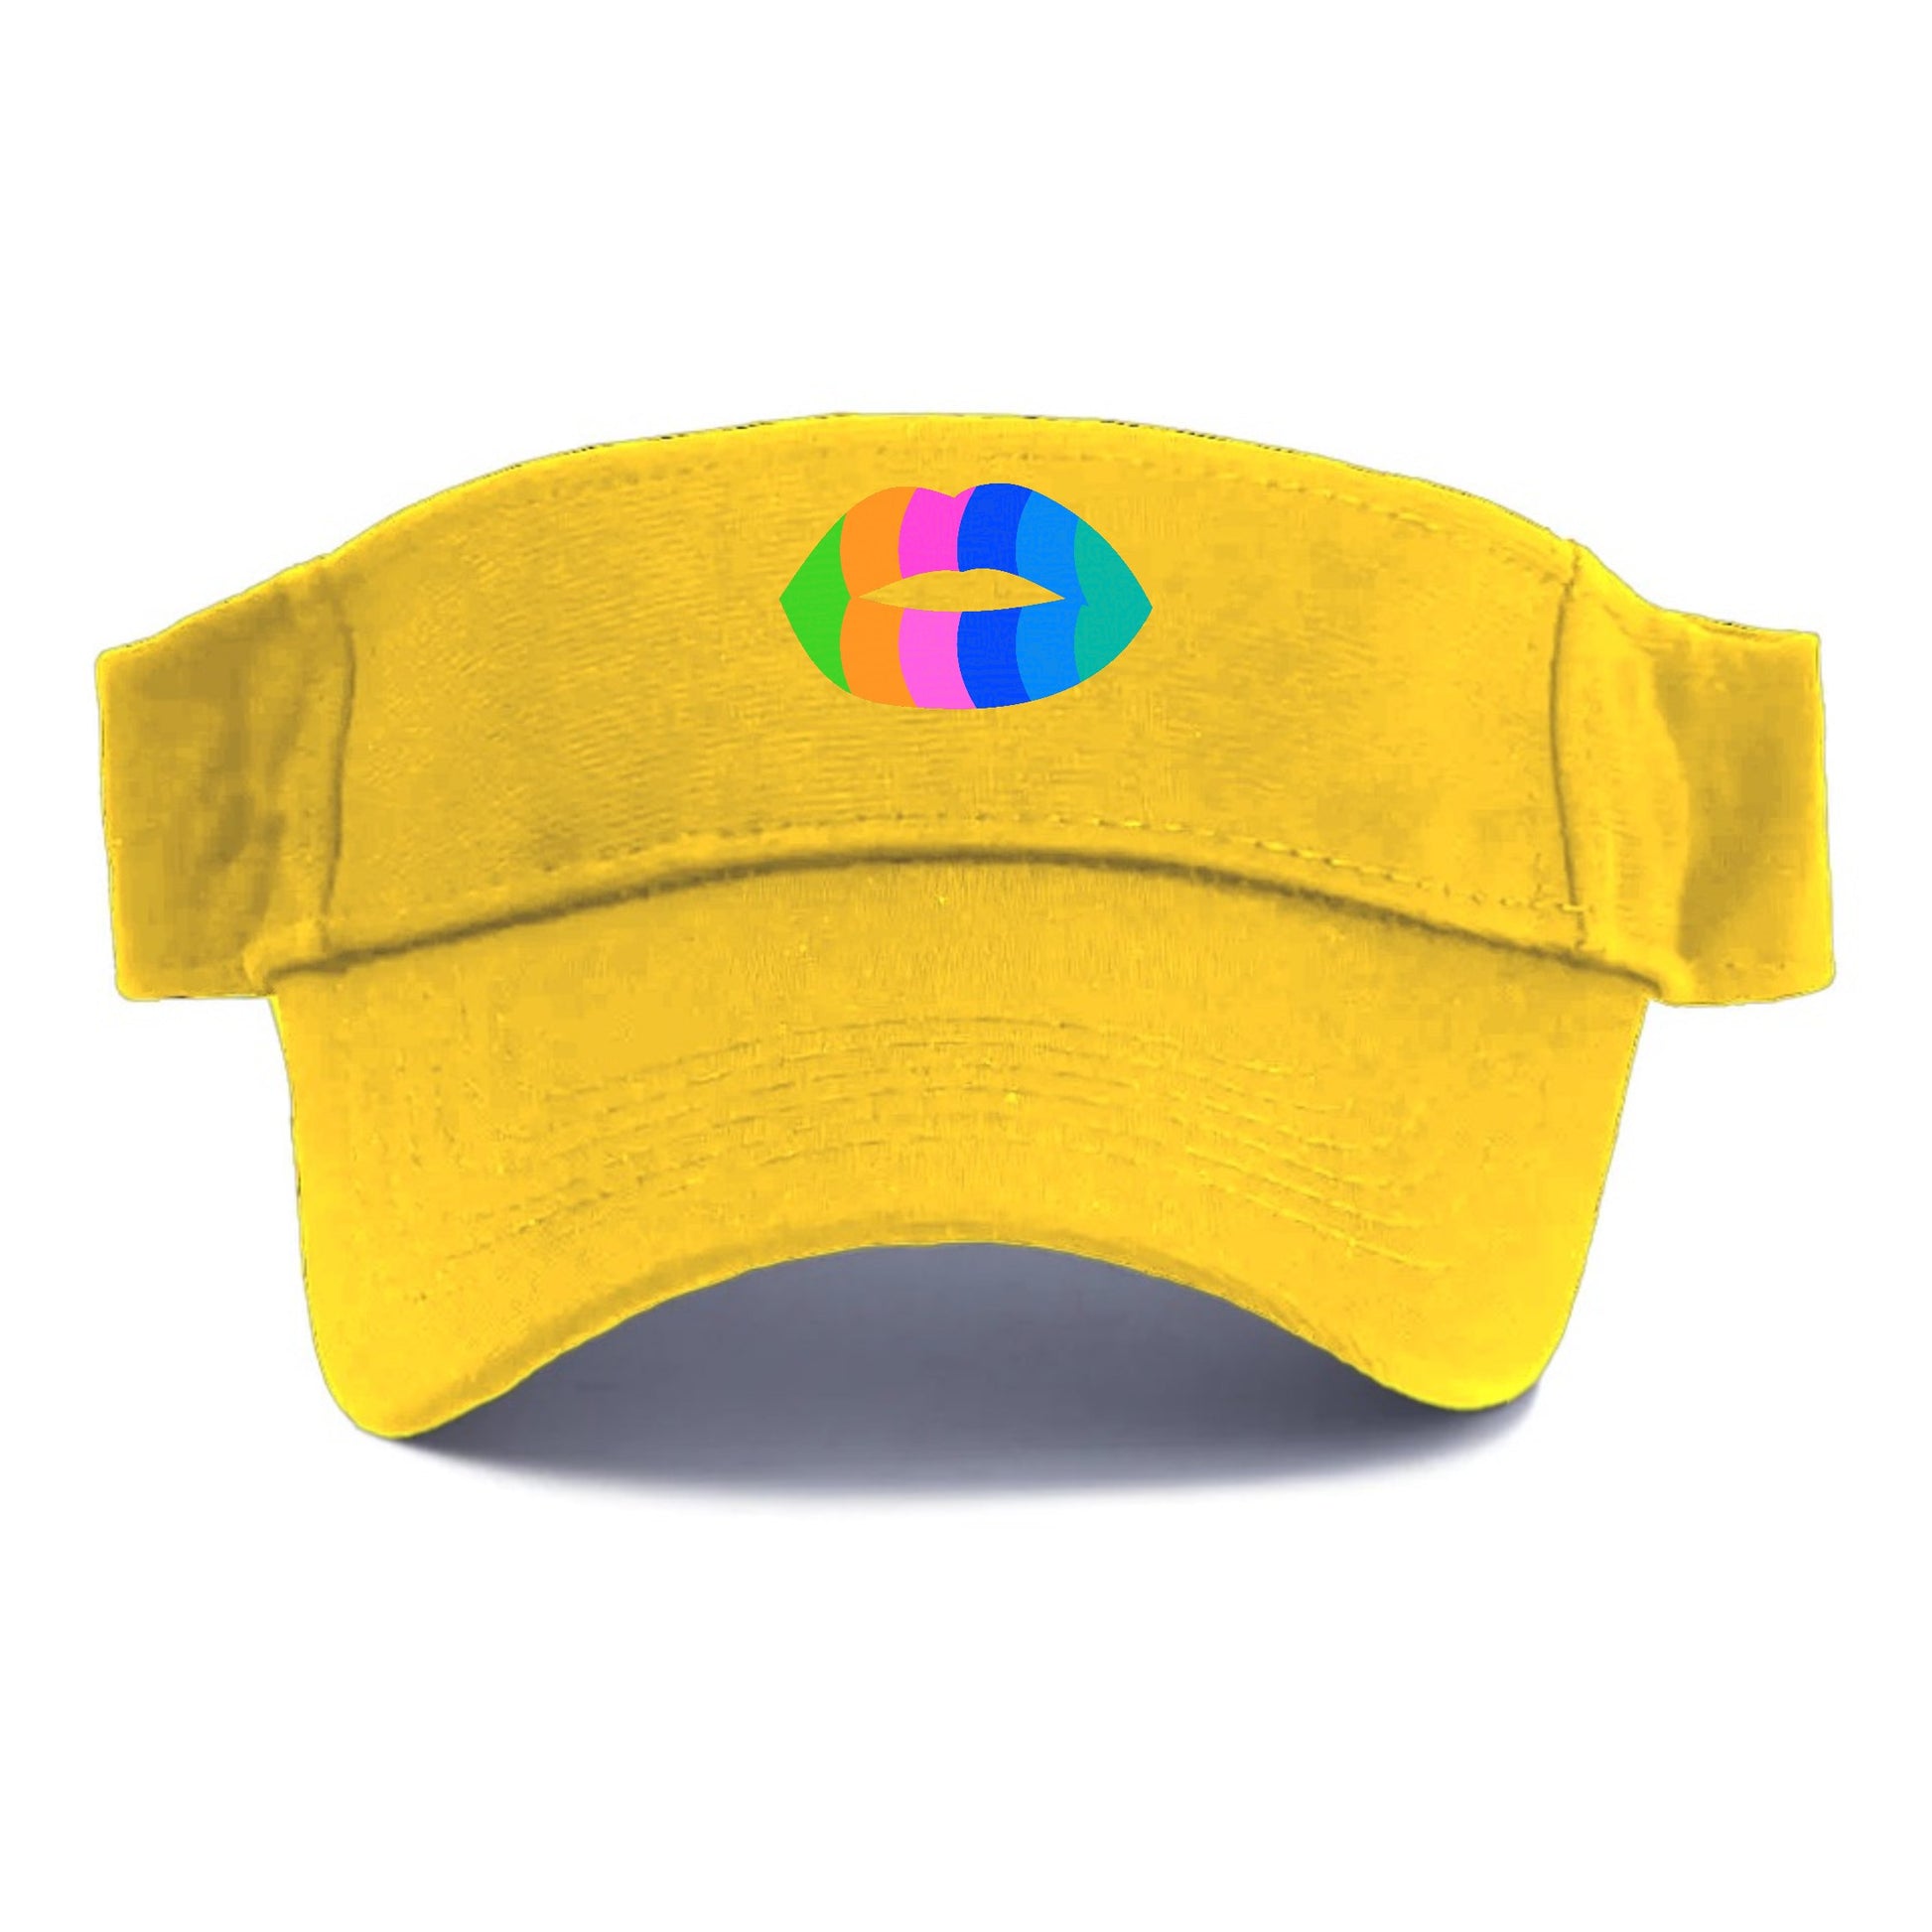 rainbow kiss Hat